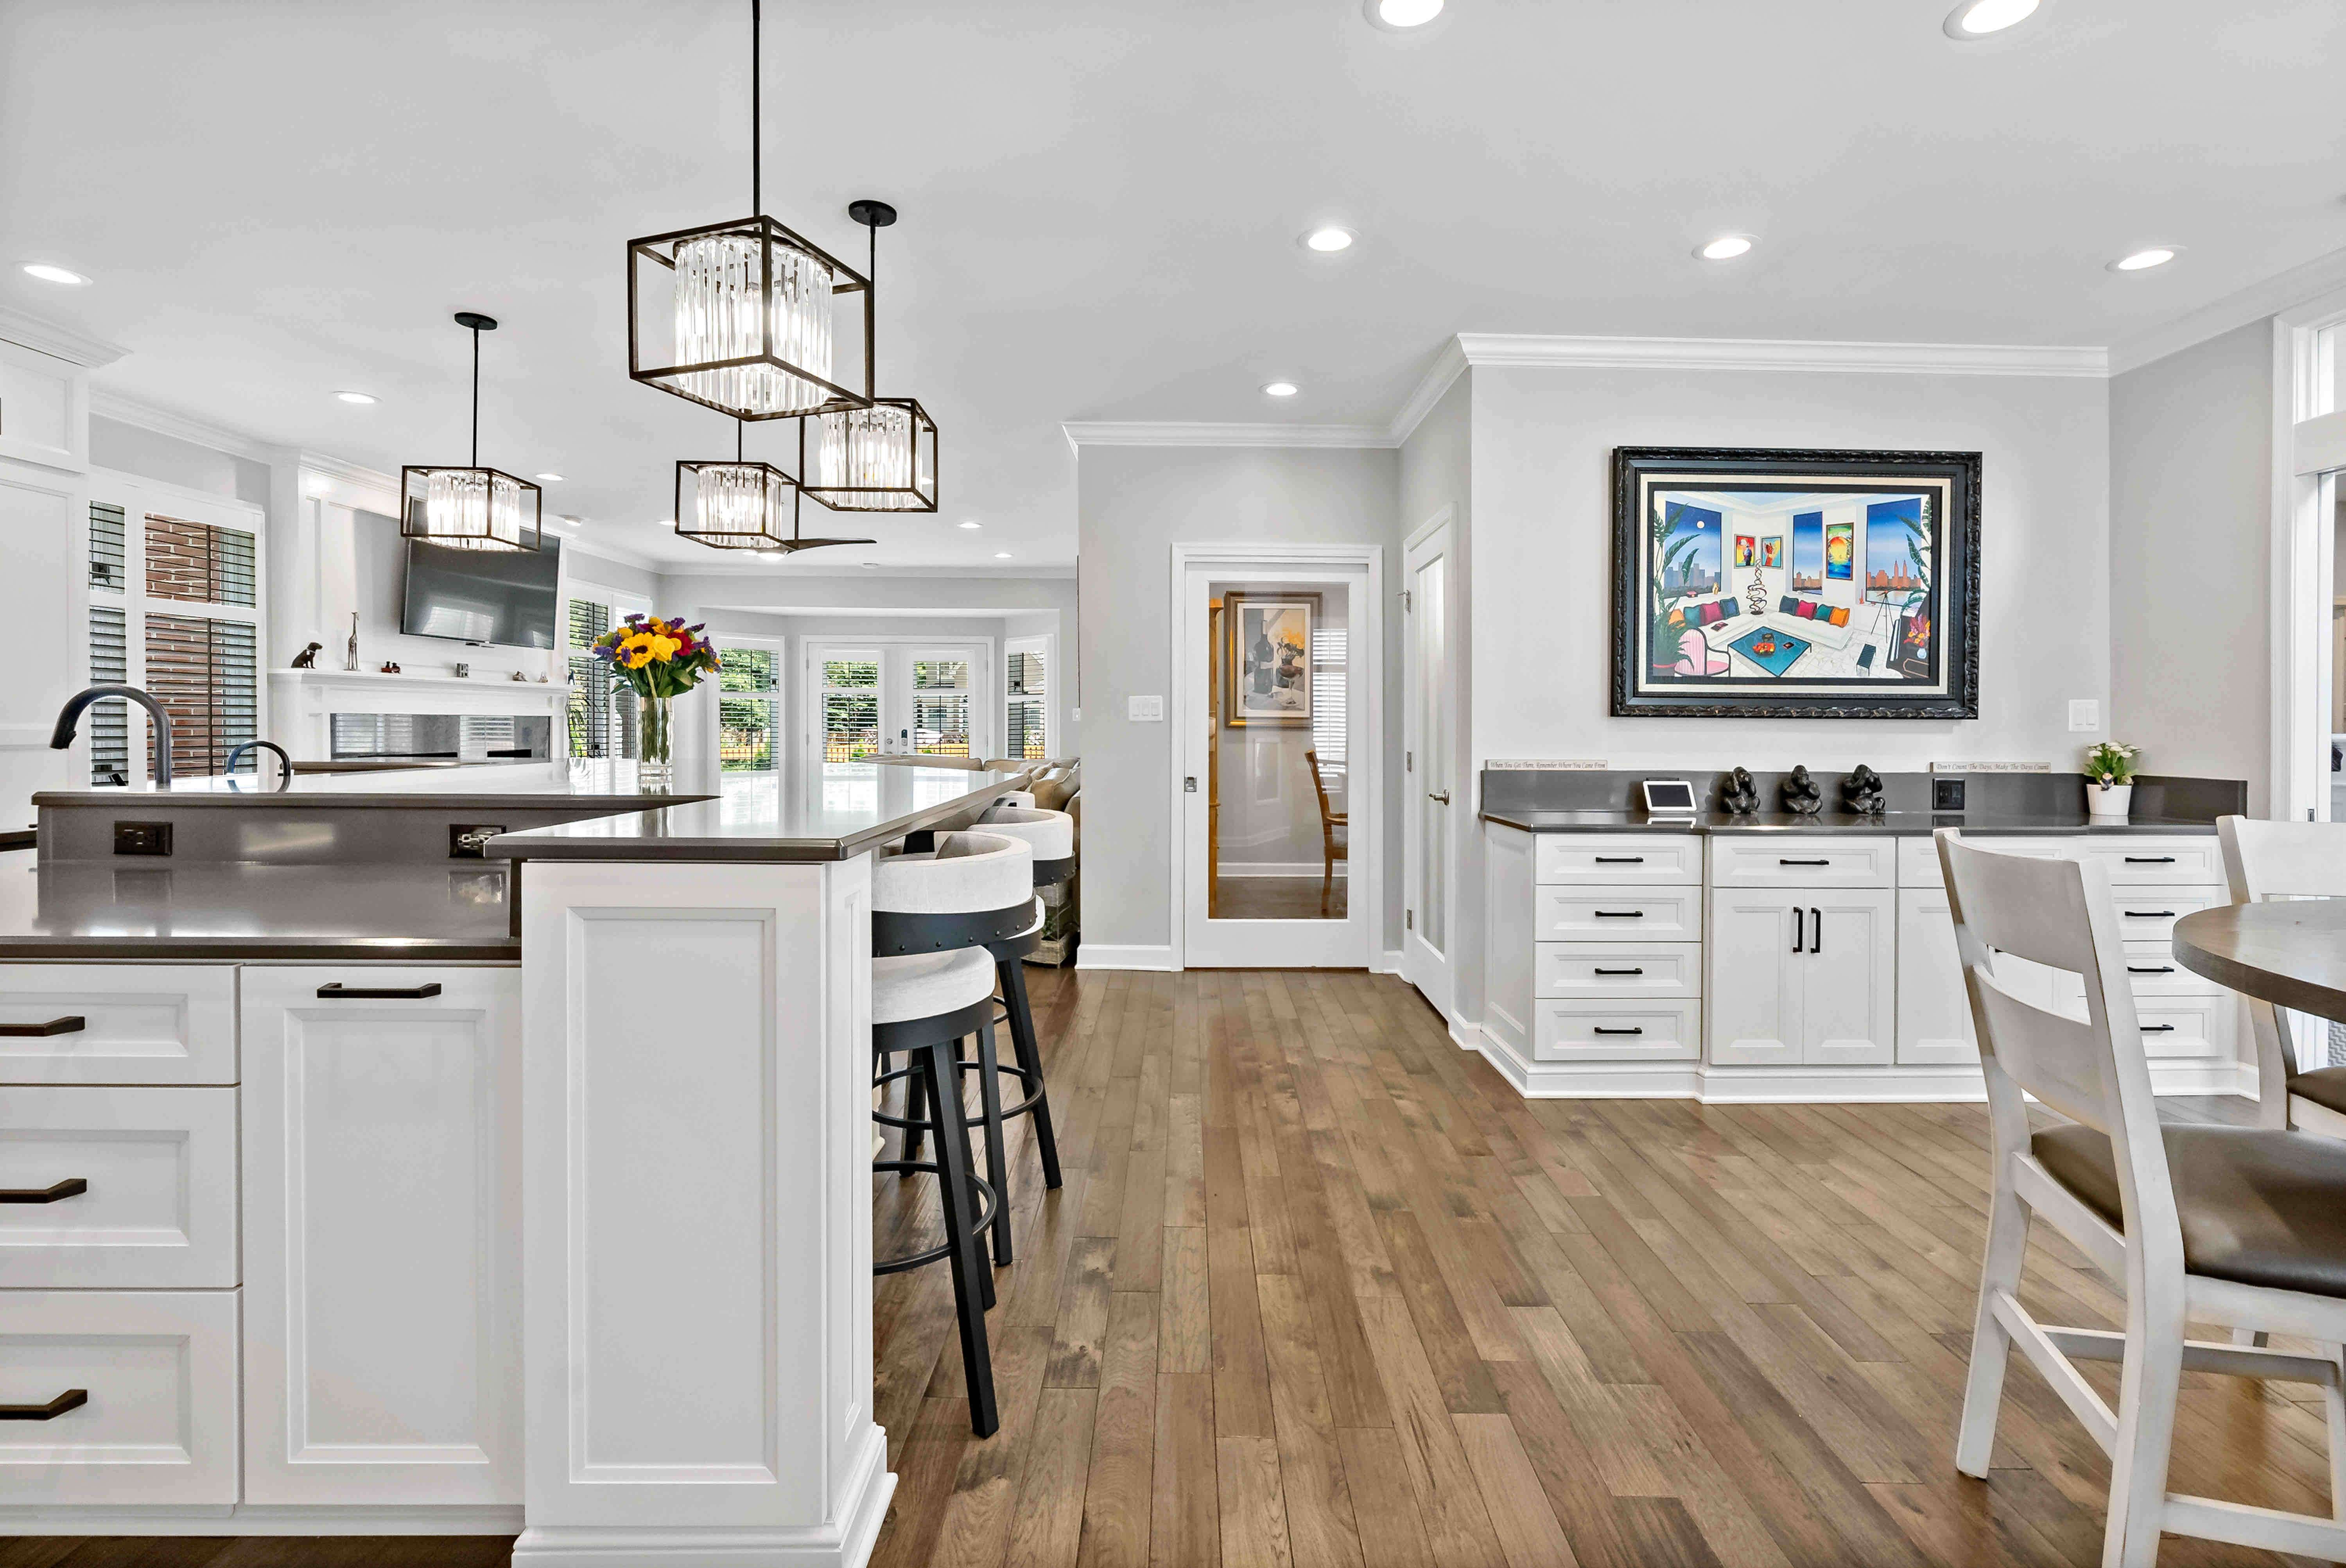 Hardwood floor kitchen with white cabinets